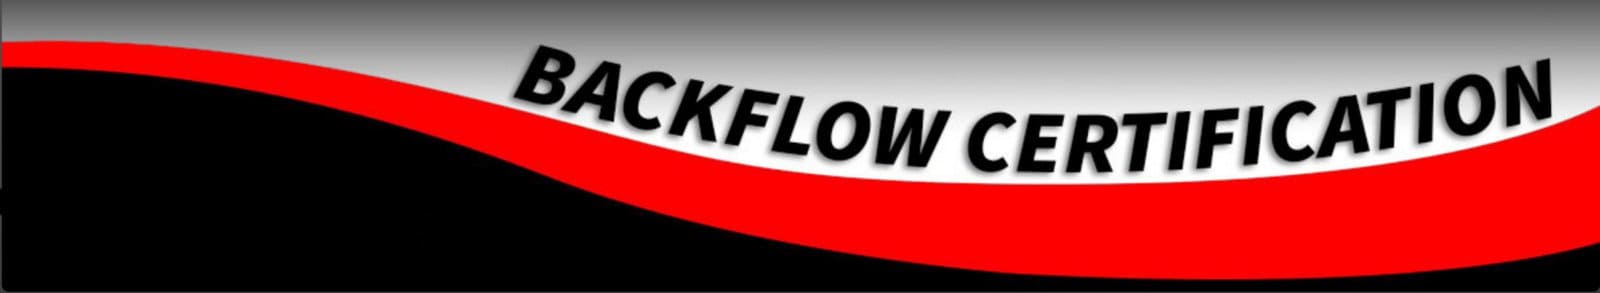 Backflow Certification Fort Lauderdale